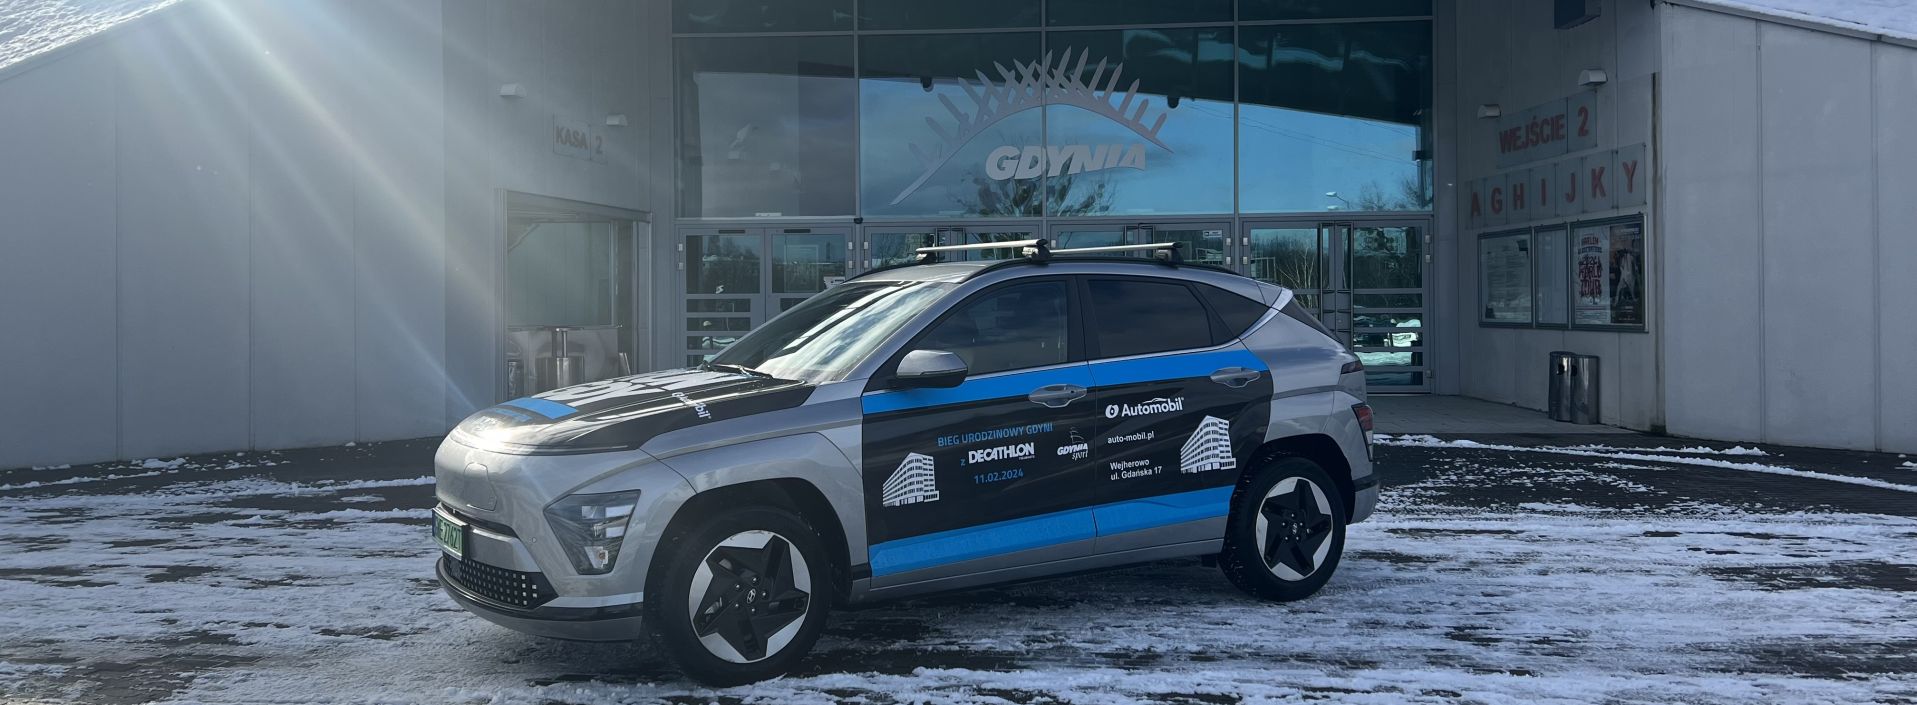 Hyundai Kona obrandowany na tle Polsat Plus Areny Gdynia 